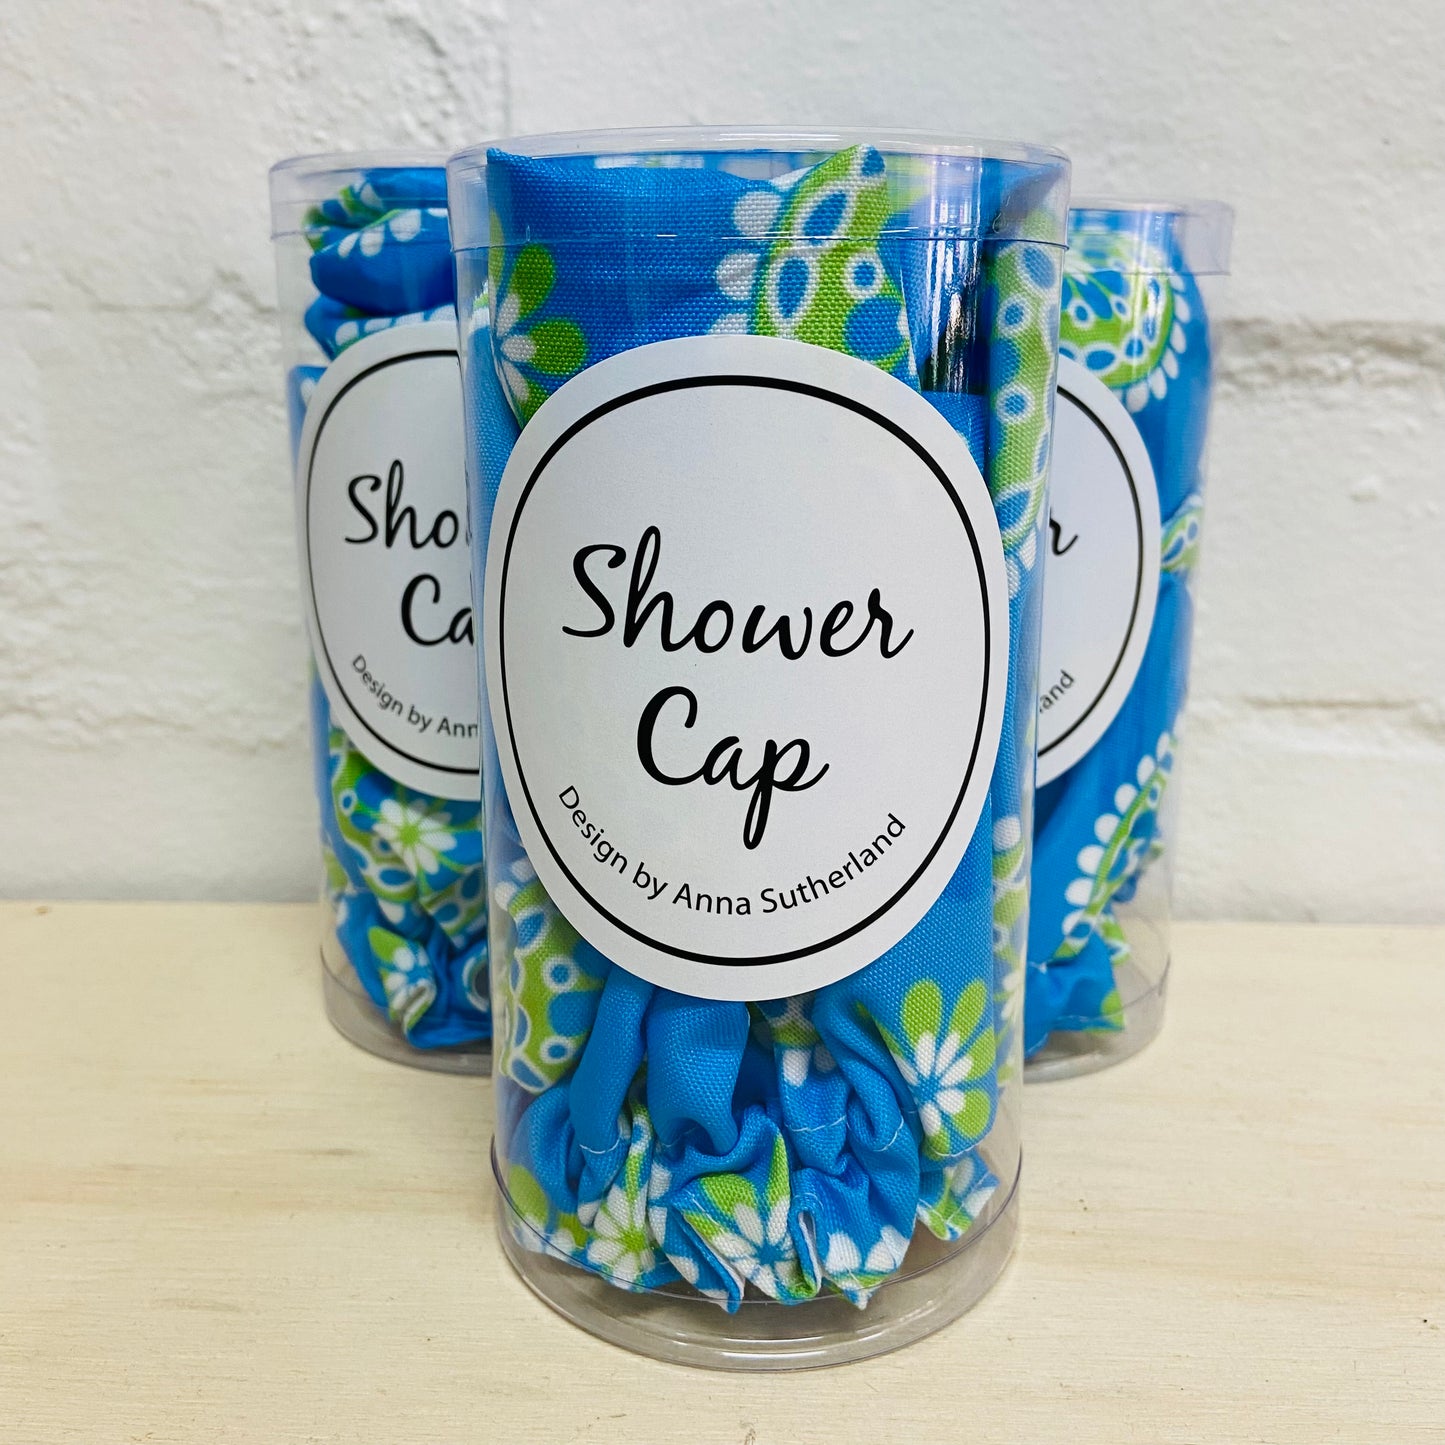 Shower Caps by Anna Sutherland